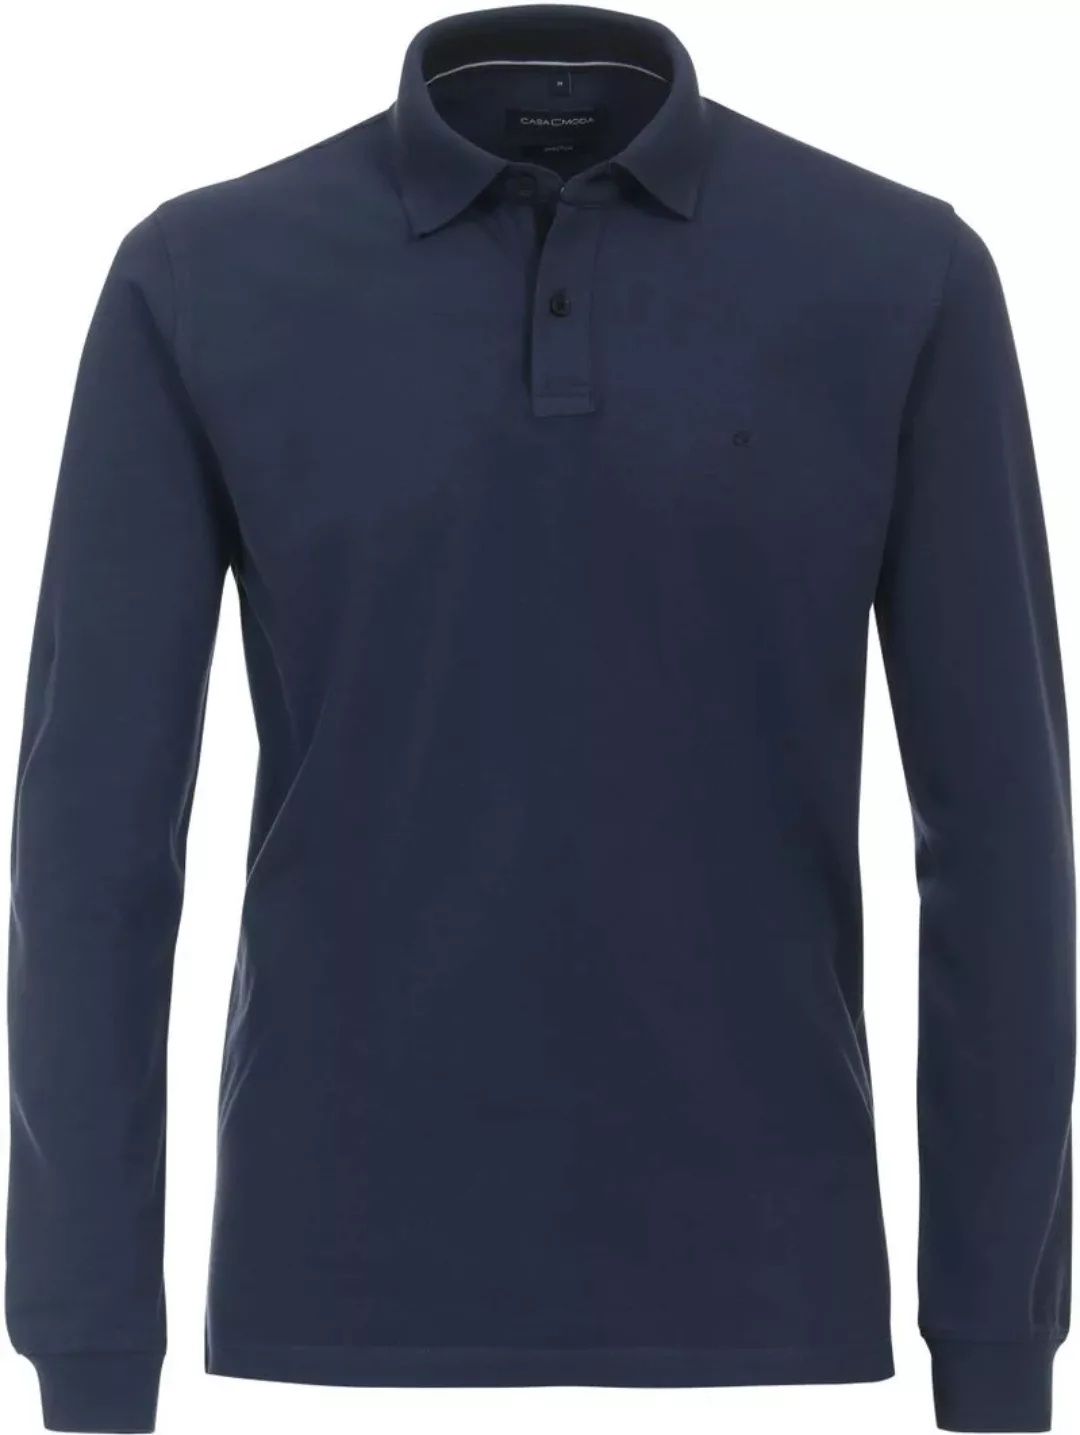 Casa Moda Longsleeve Poloshirt Blau - Größe XL günstig online kaufen